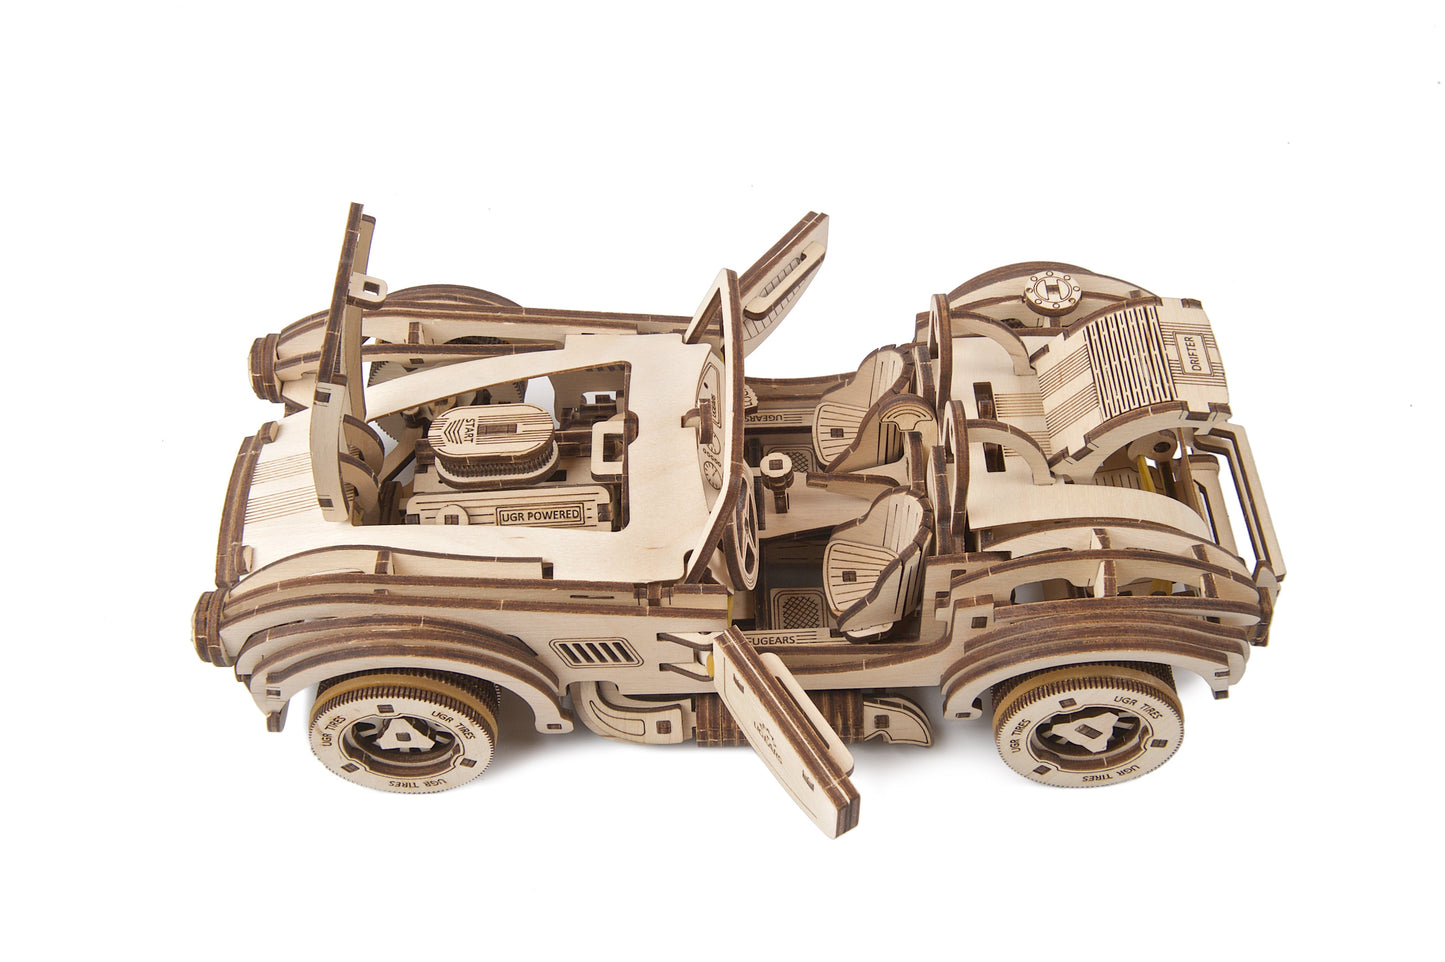 Ugears Drift Cobra Racing Car ★Mechanical 3D Puzzle Kit Model Toys Gift Present Birthday Xmas Christmas Kids Adults